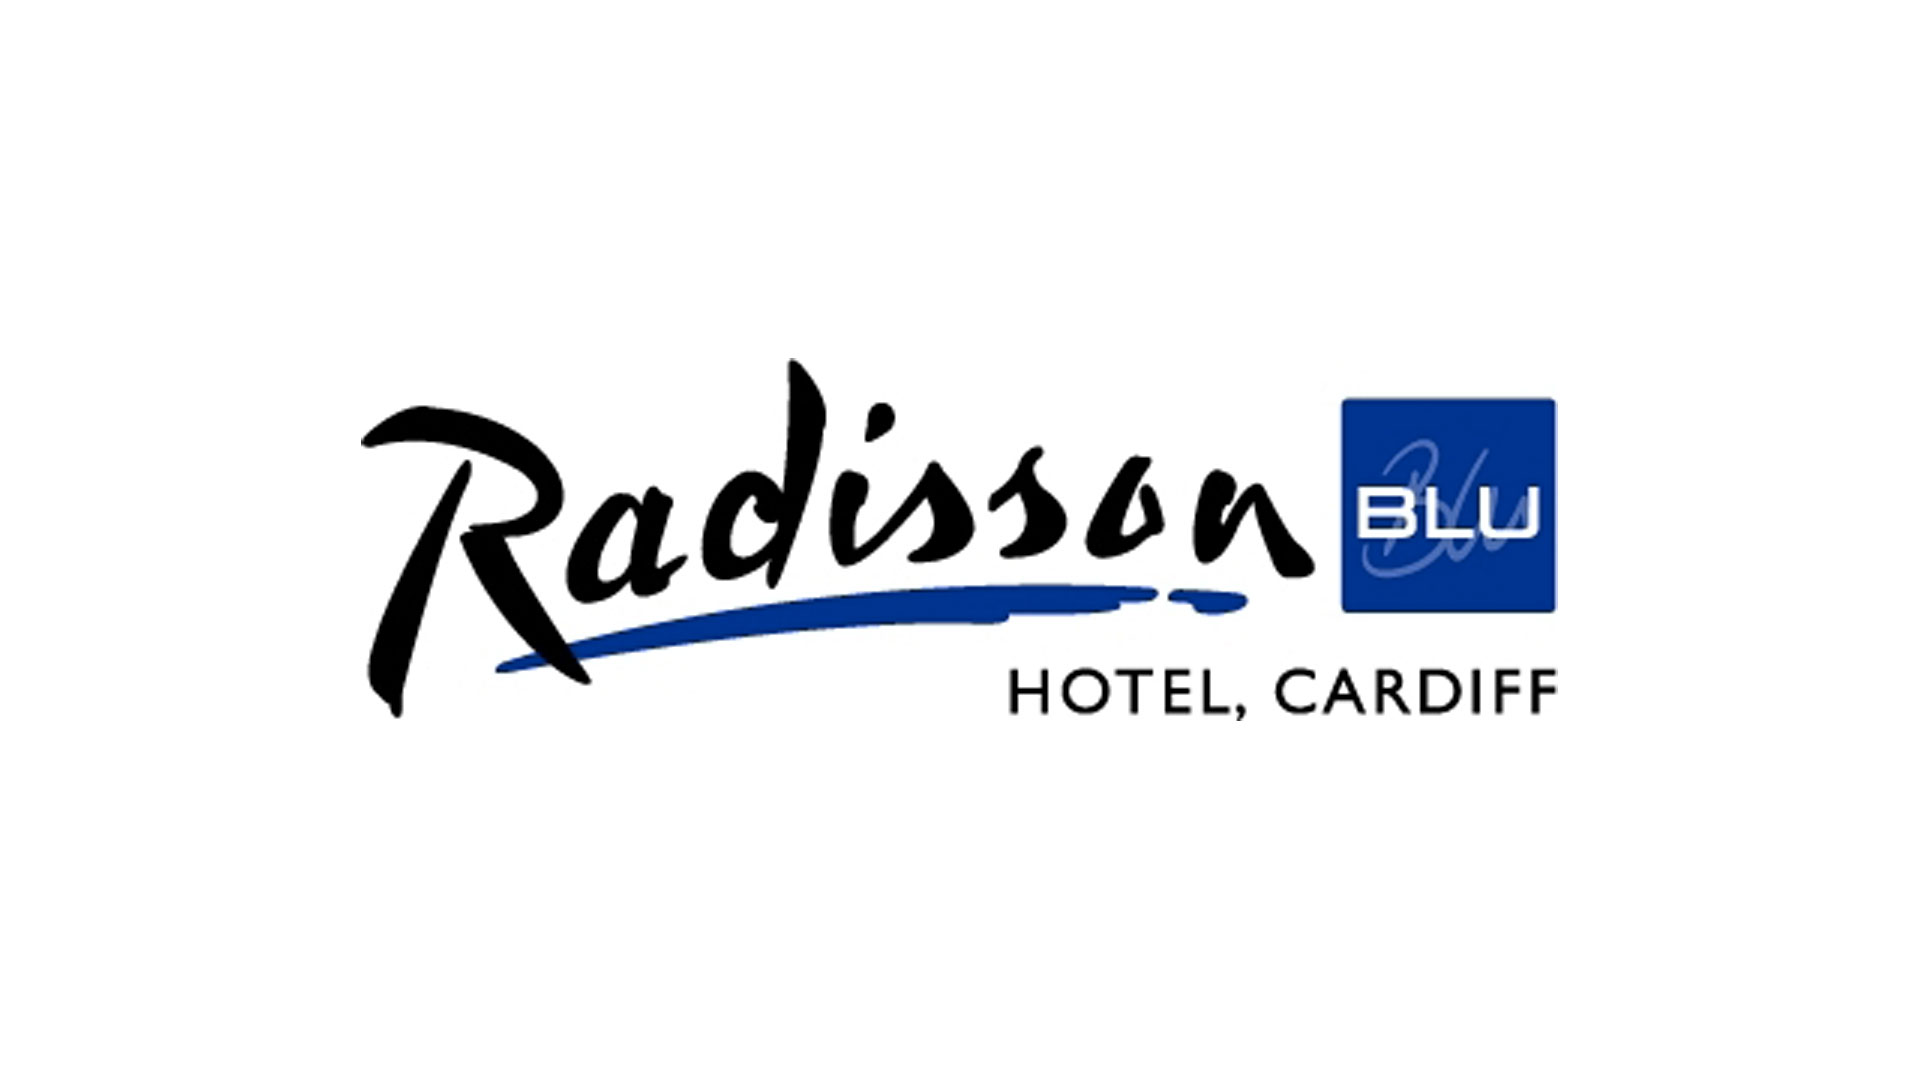 Raddison Blu